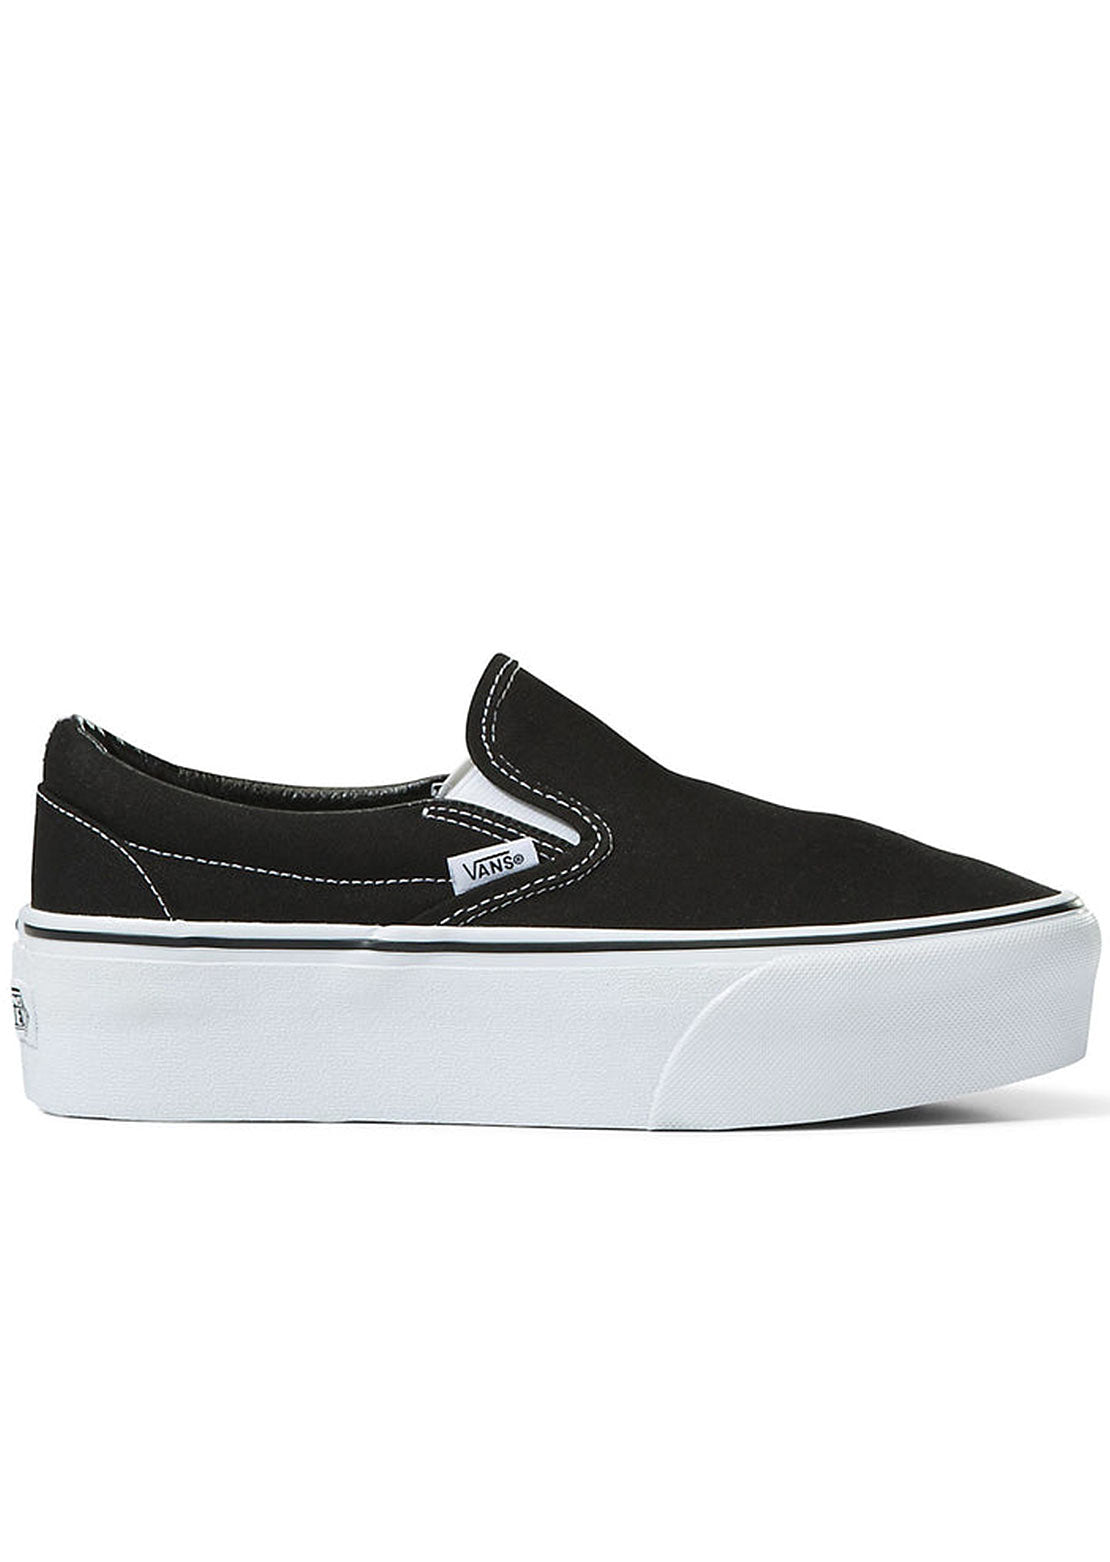 Vans Unisex Classic Slip-On Stackform Shoes Black/True White